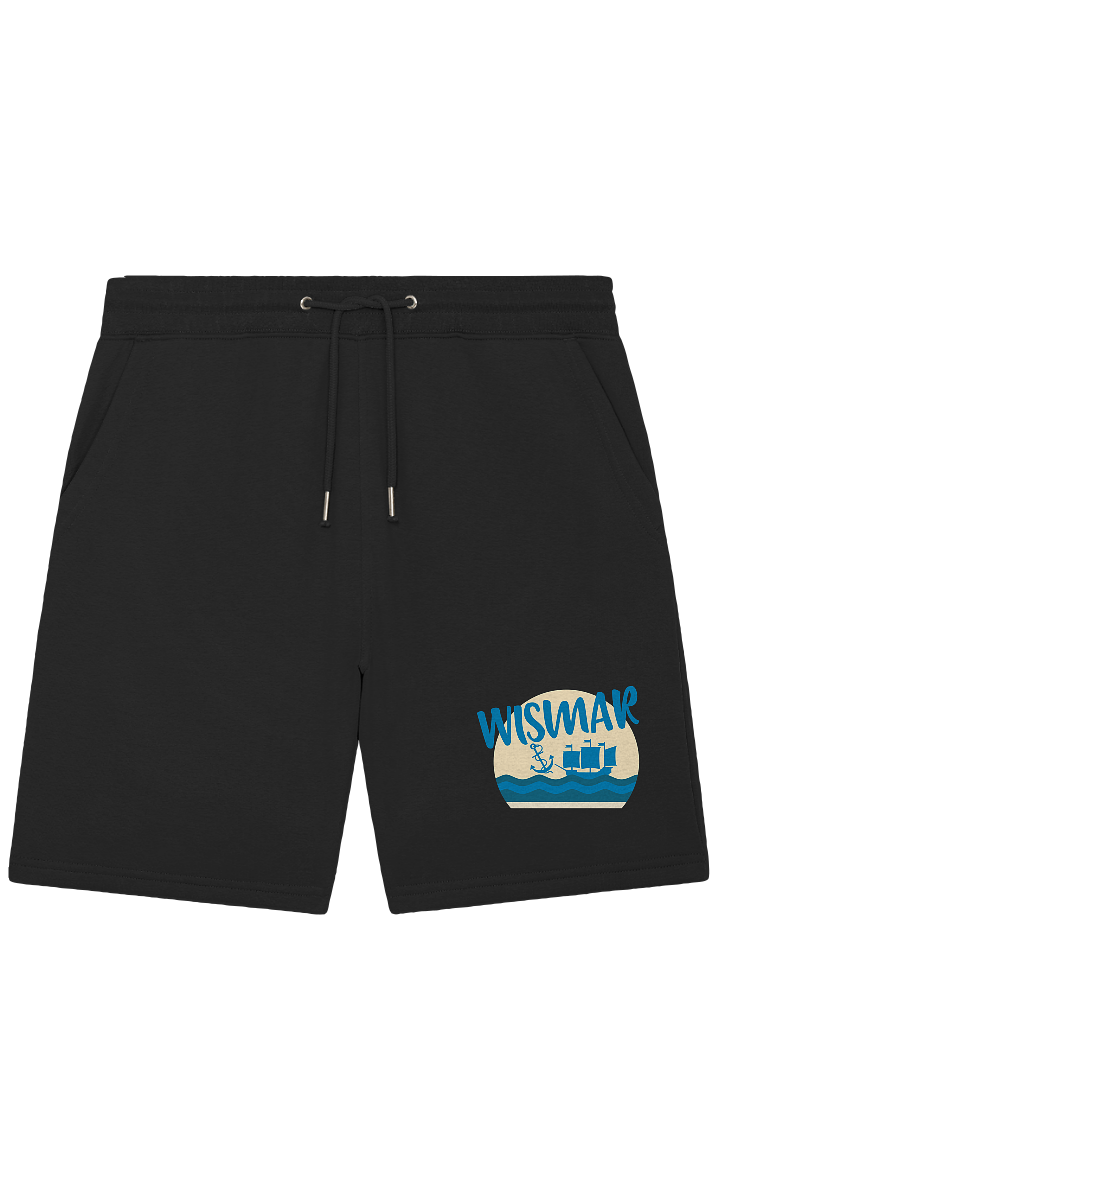 Wismar Anker Kogge blau - Organic Jogger Shorts